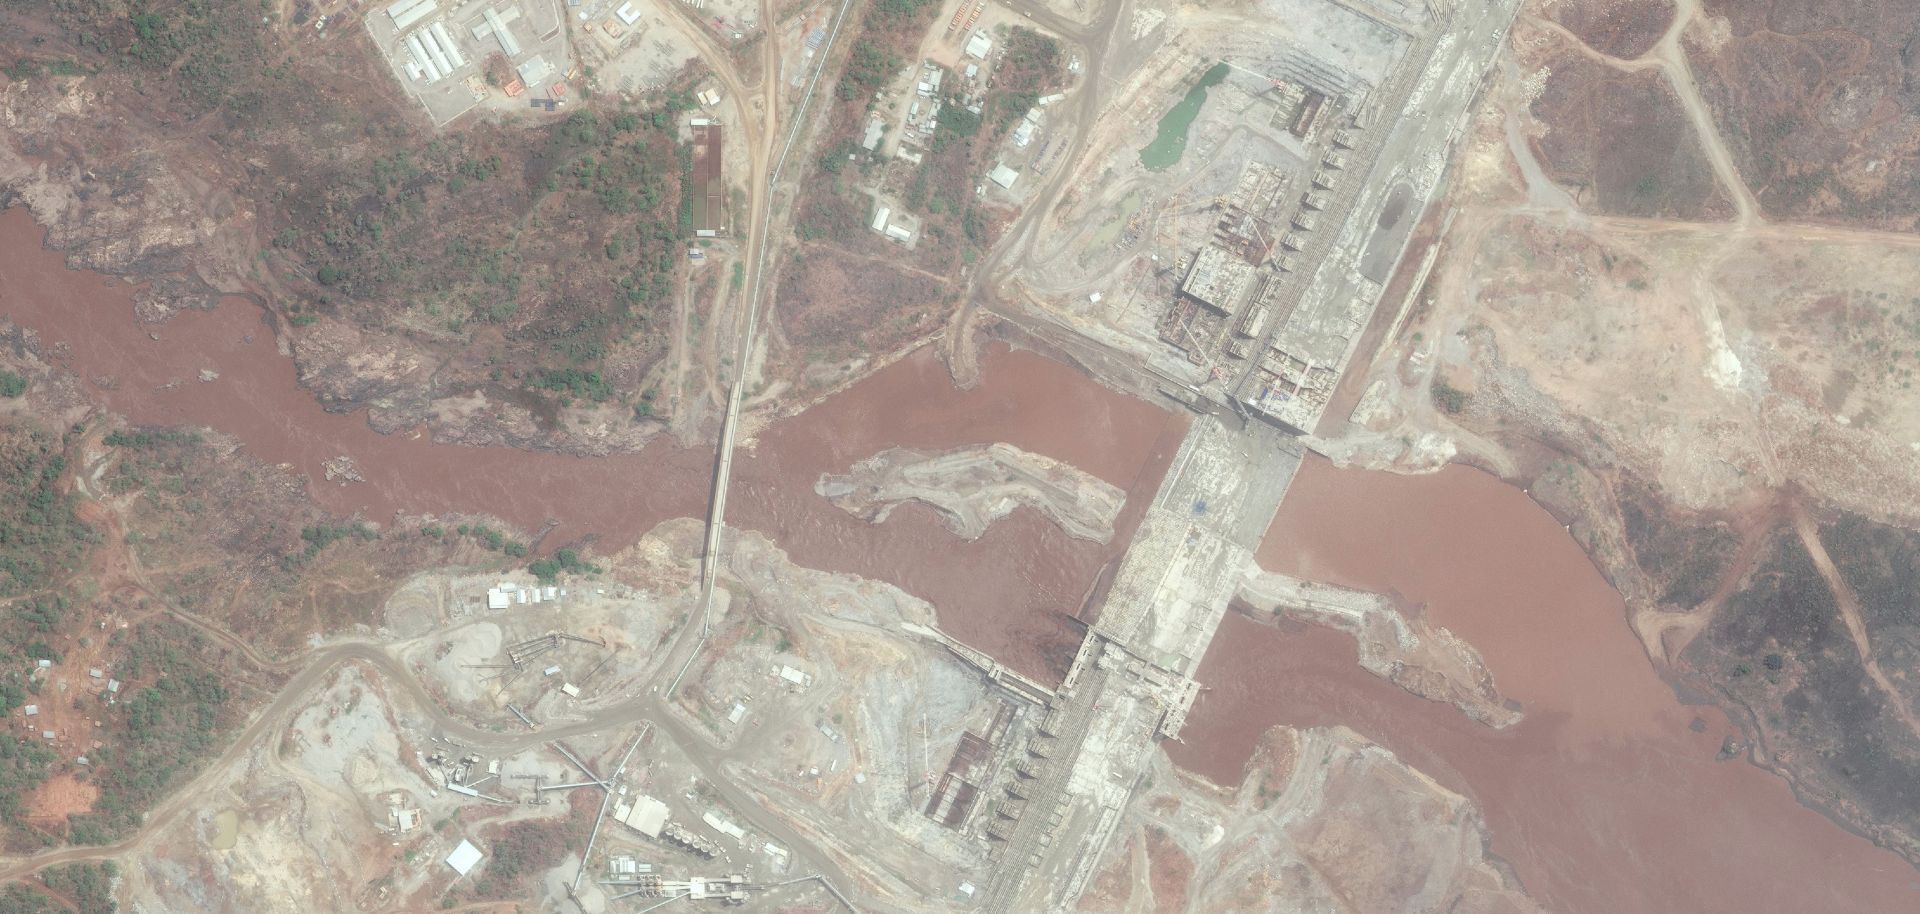 Satellite imagery of the The Grand Ethiopian Renaissance Dam.